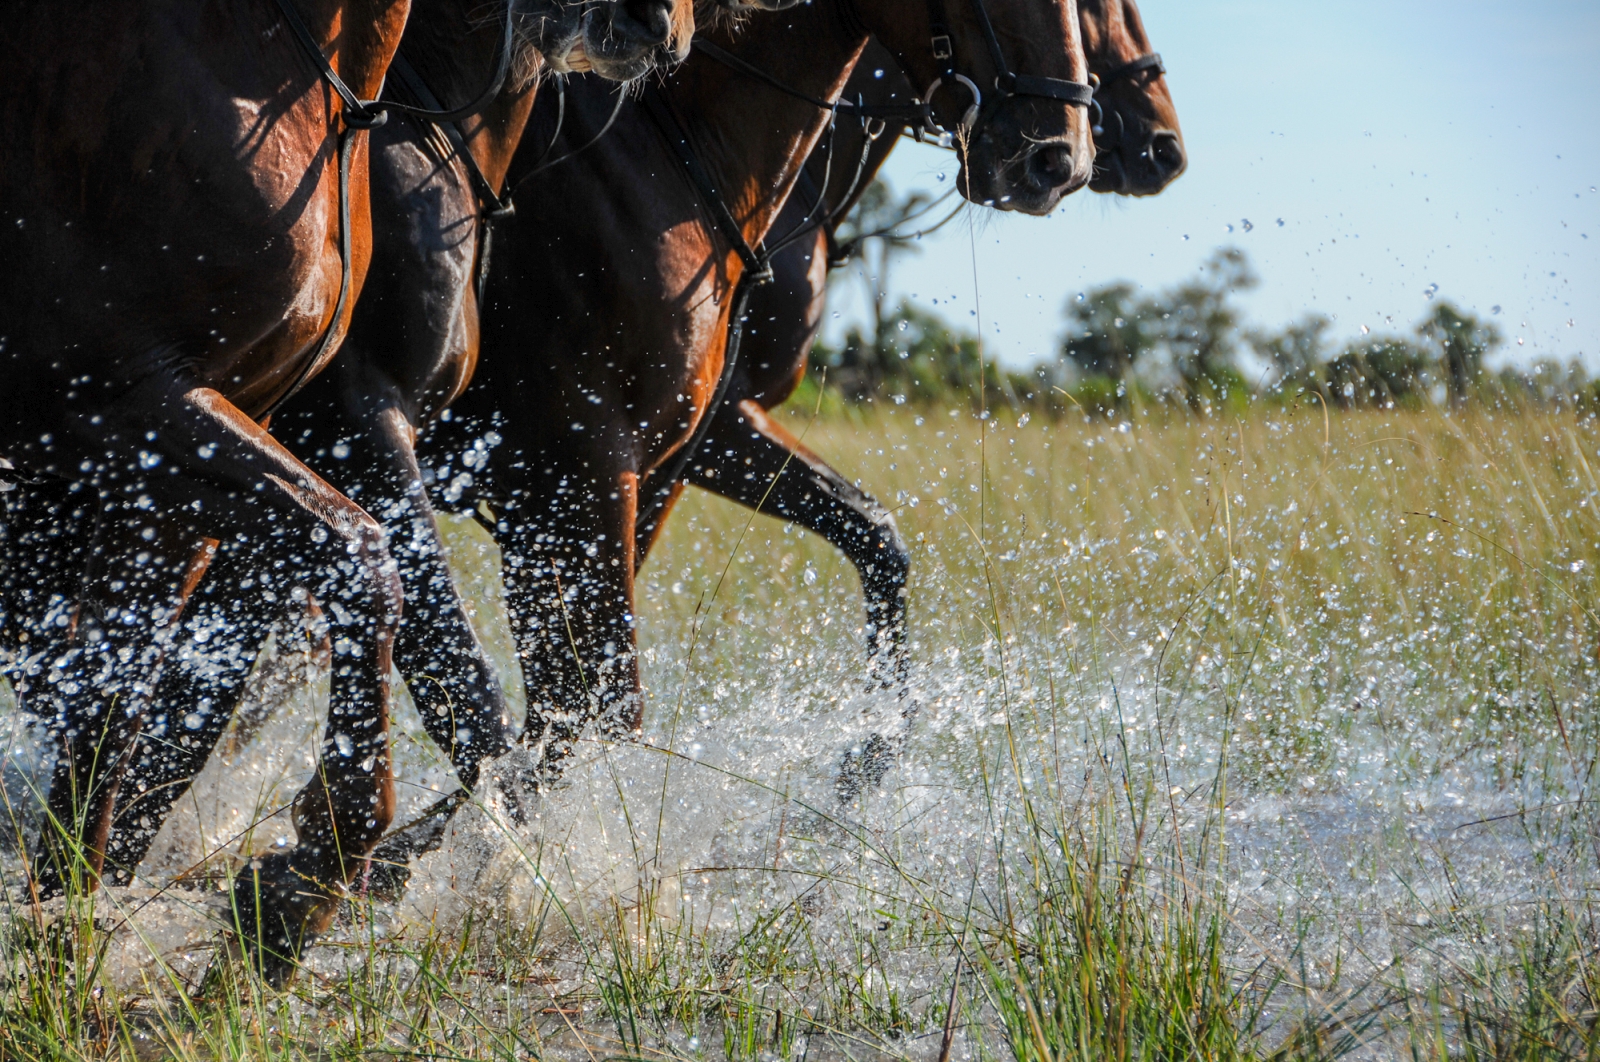 Closeup of horses' front legs splashing through the waters of the Okavango